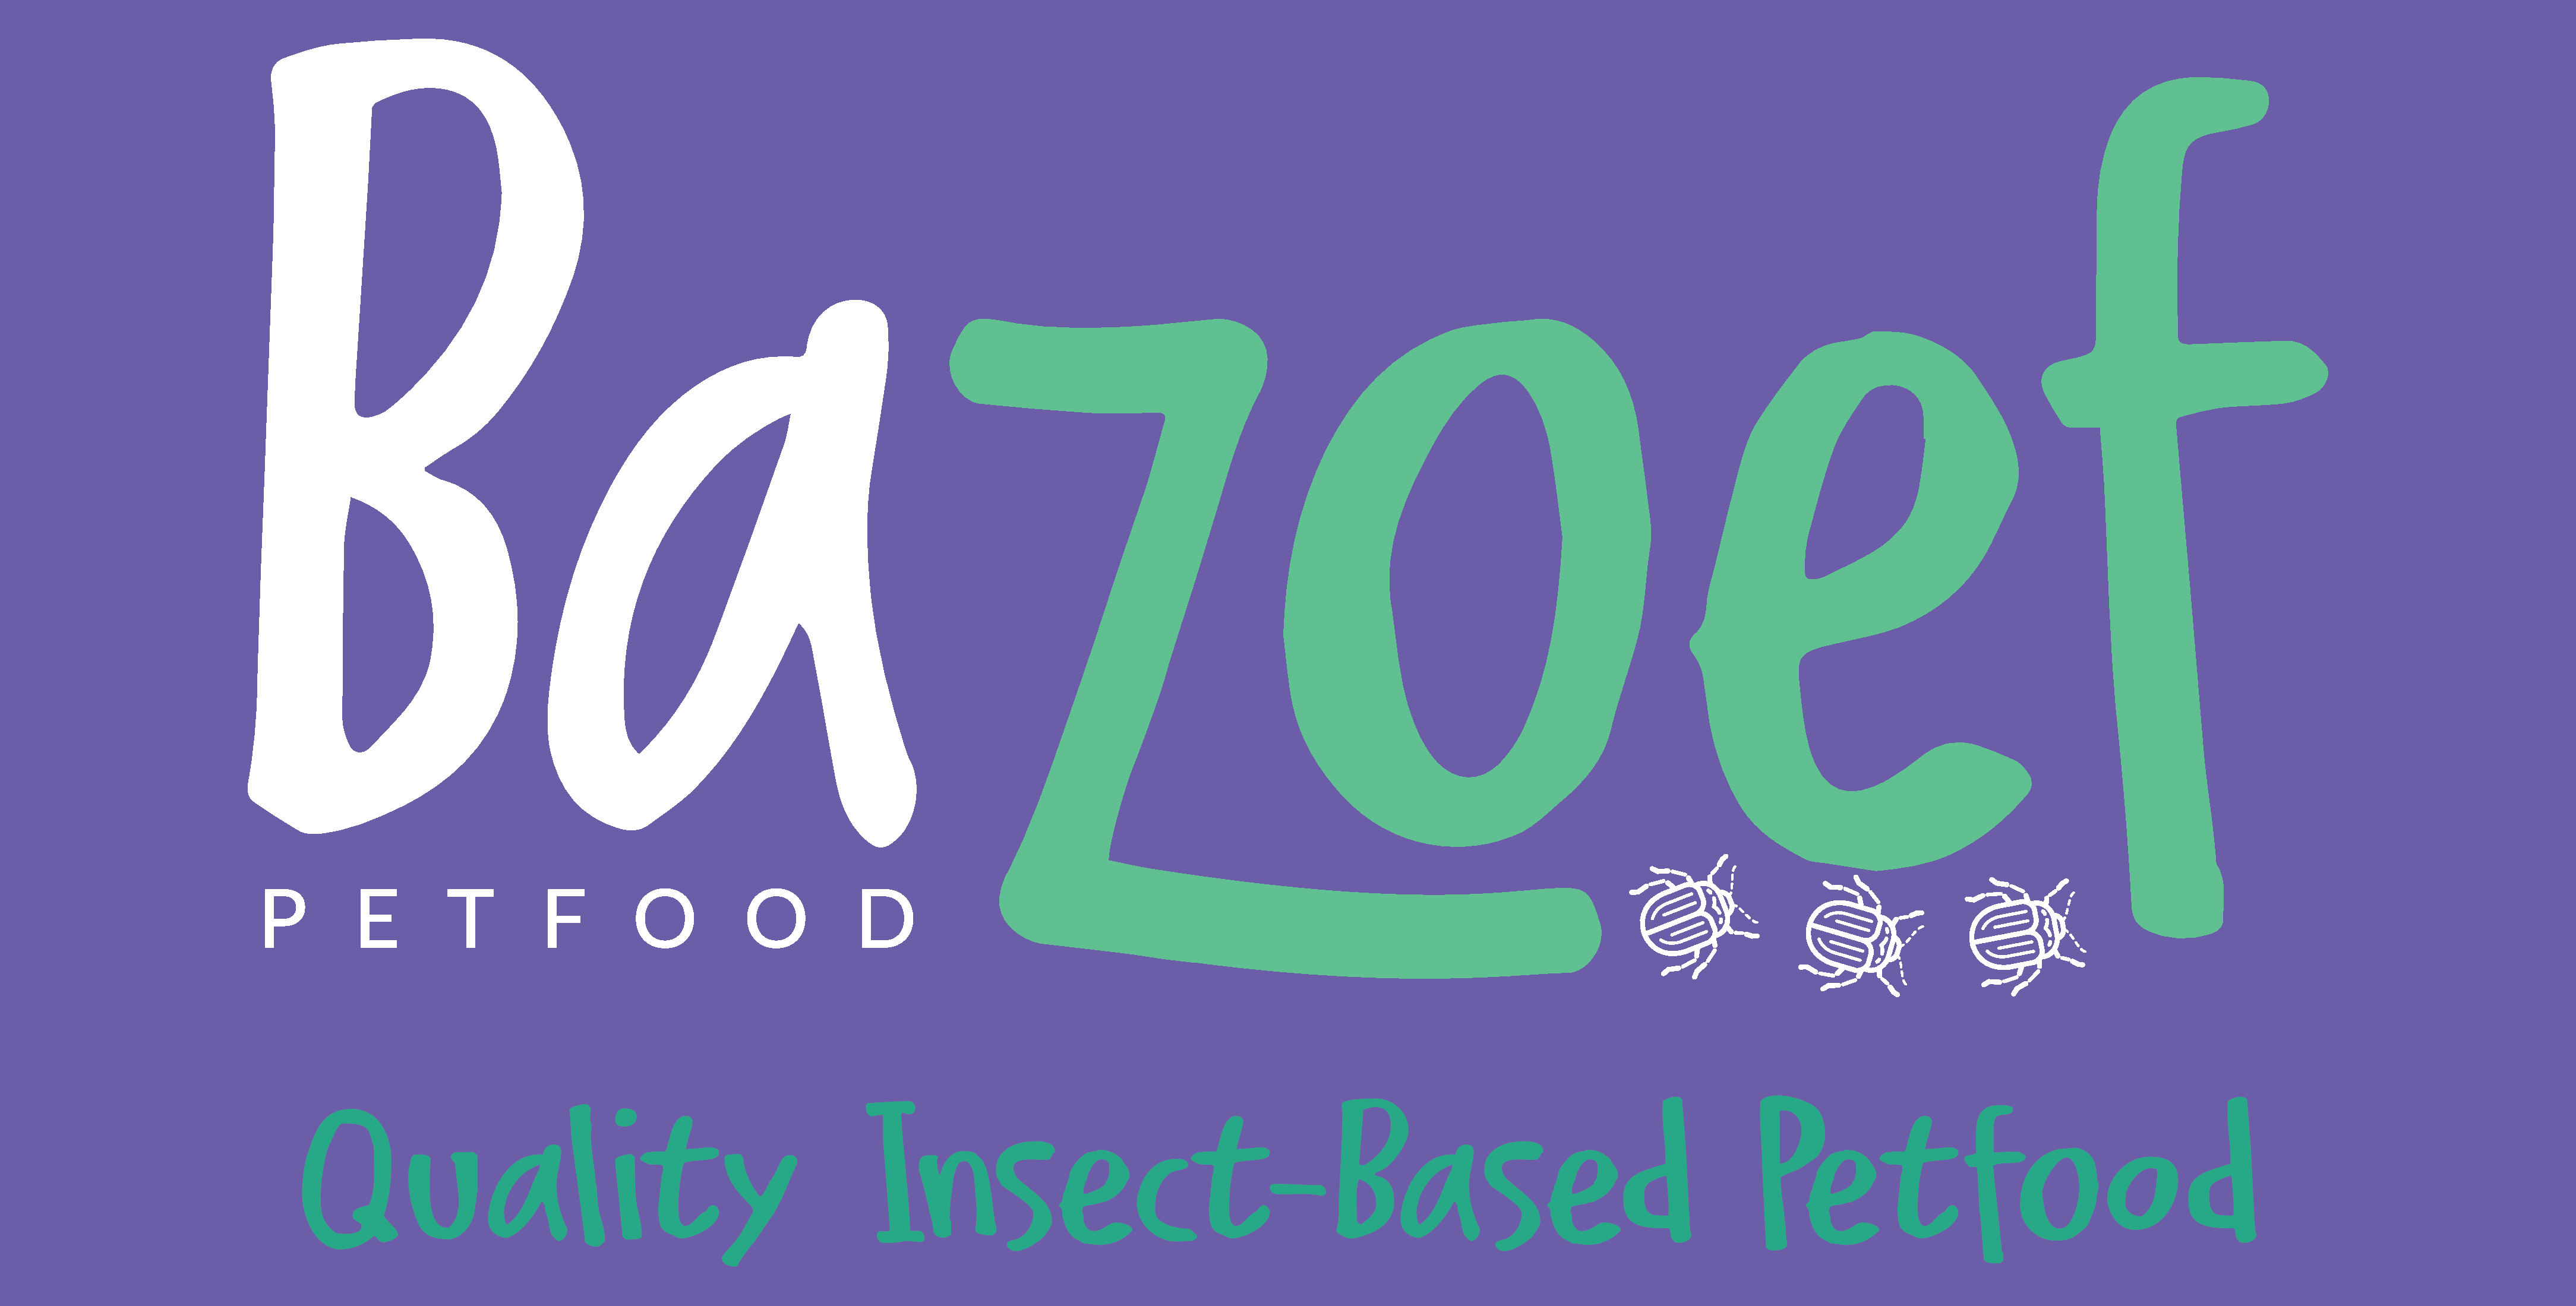 Logo Bazoef + mention quality based